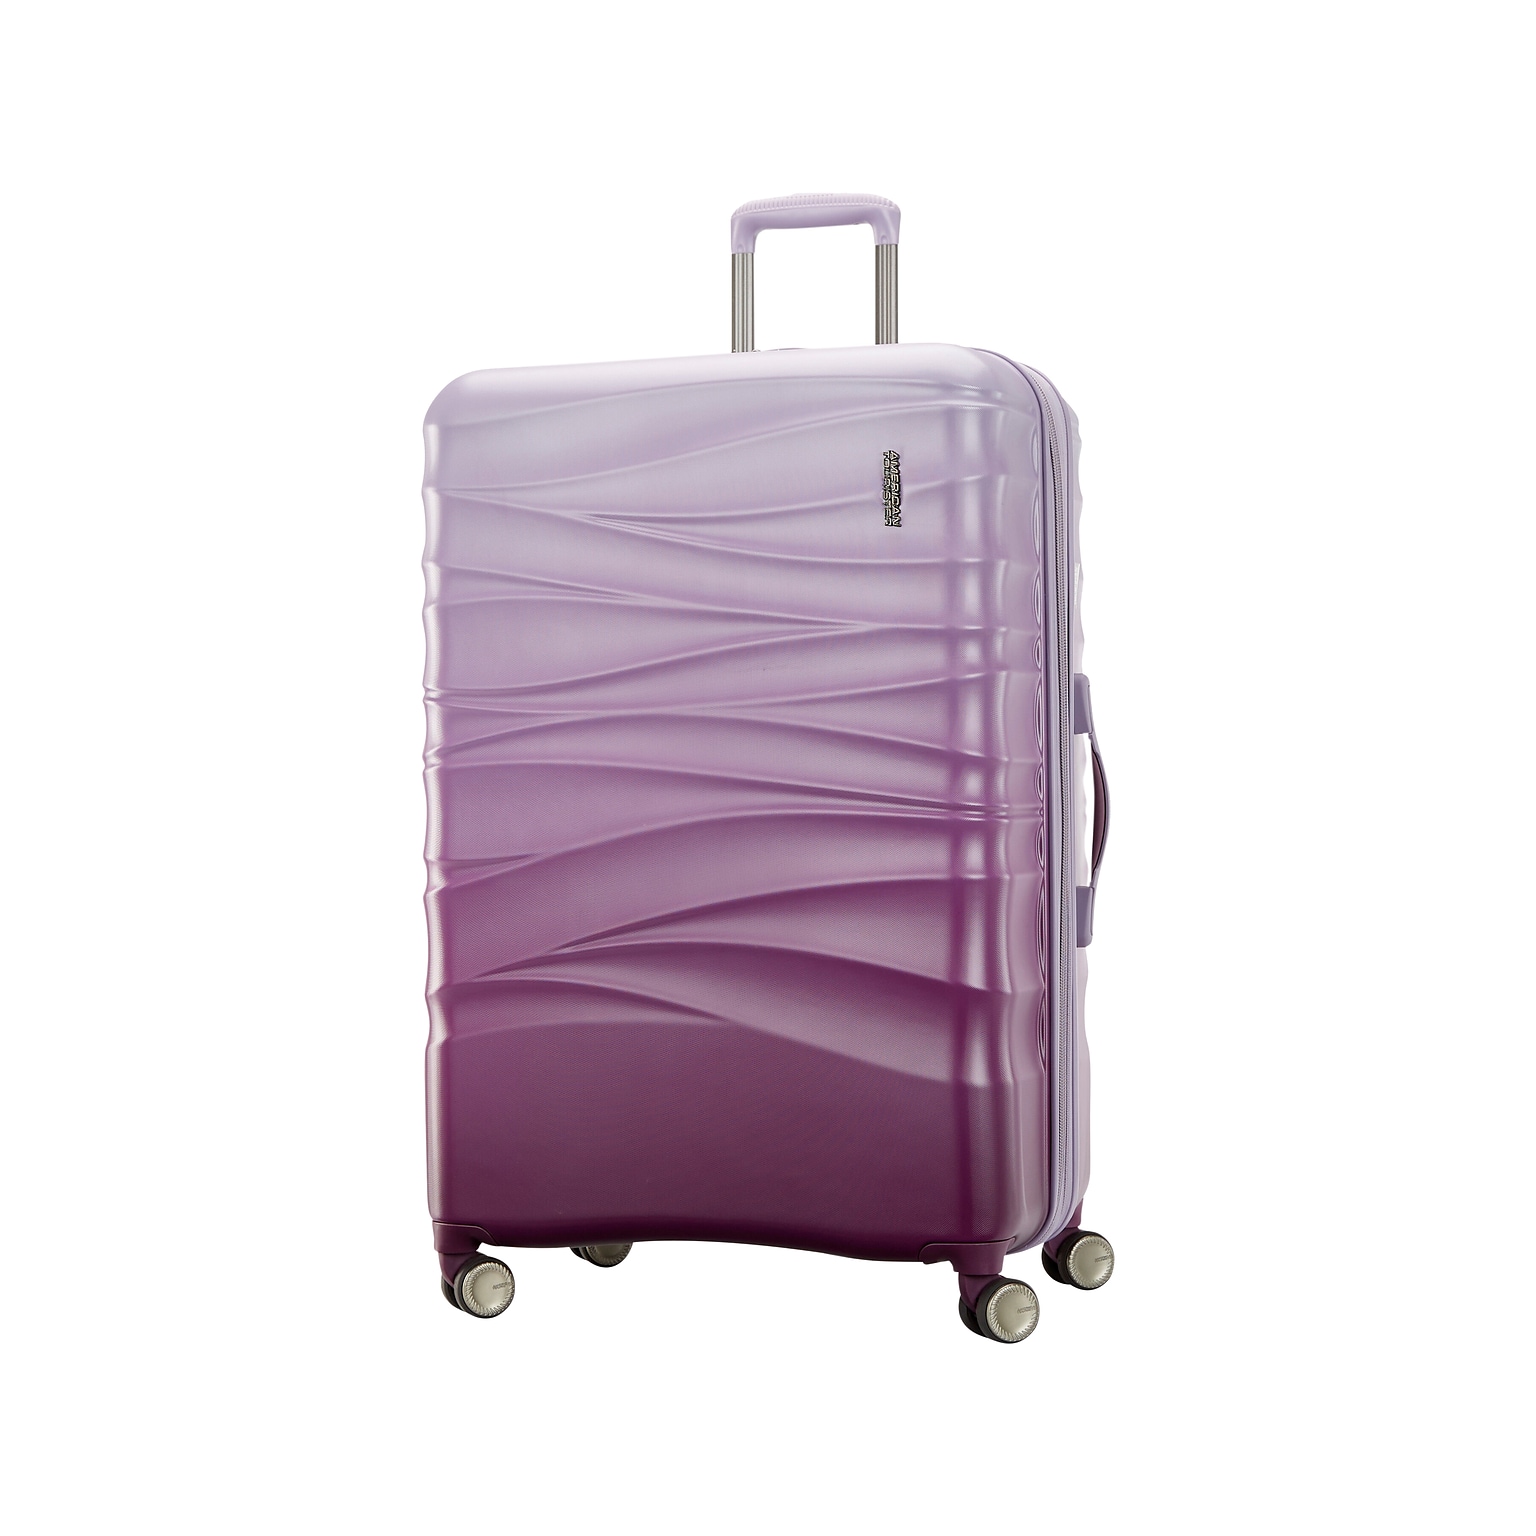 American Tourister Cascade 31 Hardside Suitcase, 4-Wheeled Spinner, Purple Haze (143314-4321)